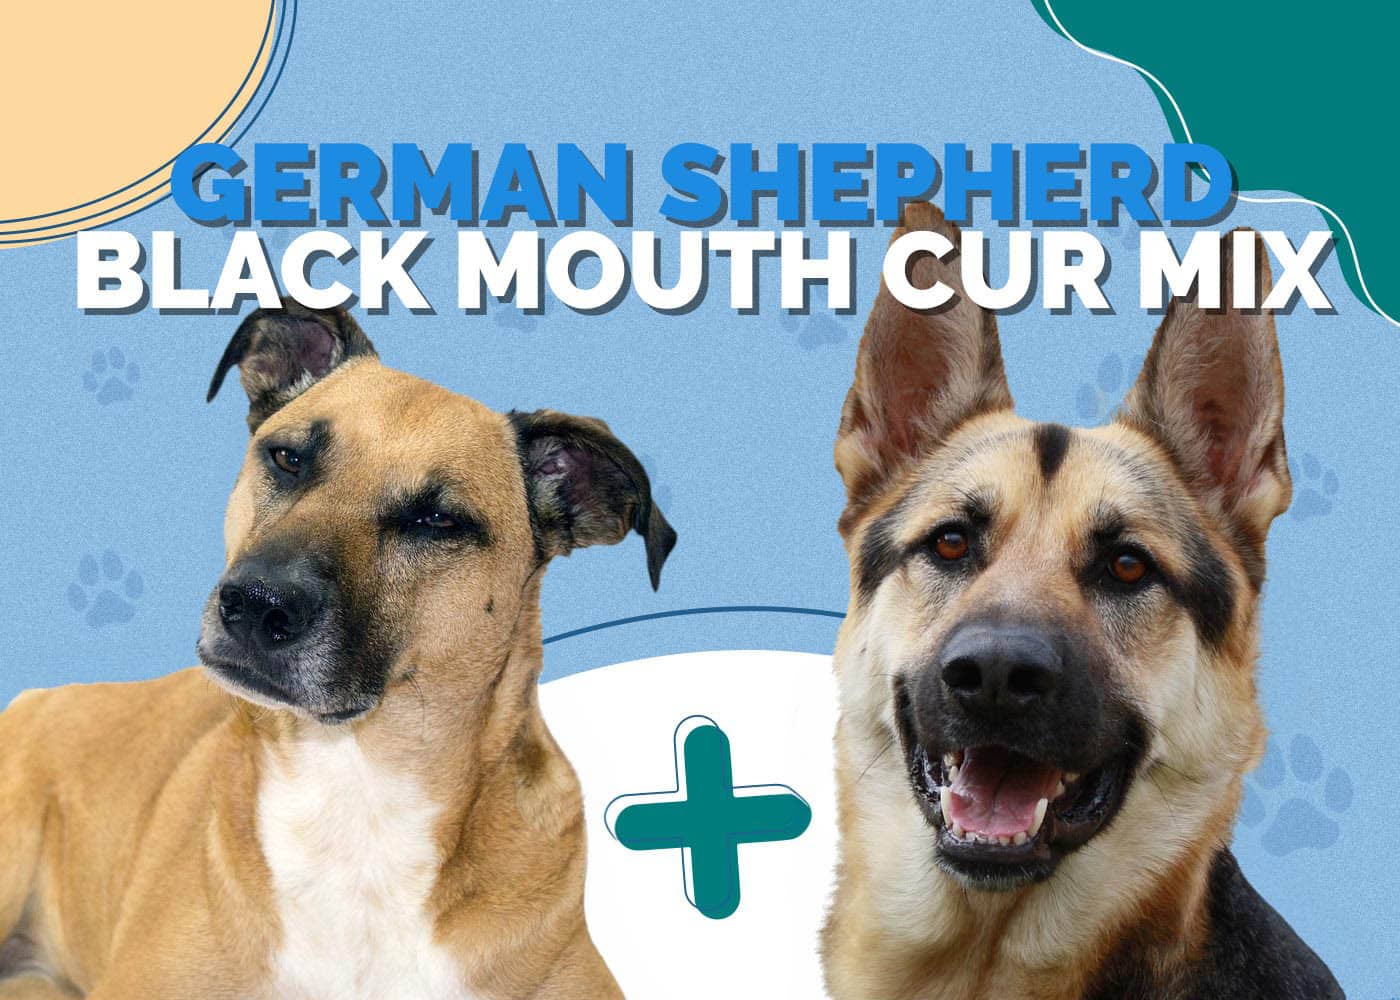 German Shepherd Black Mouth Cur Mix